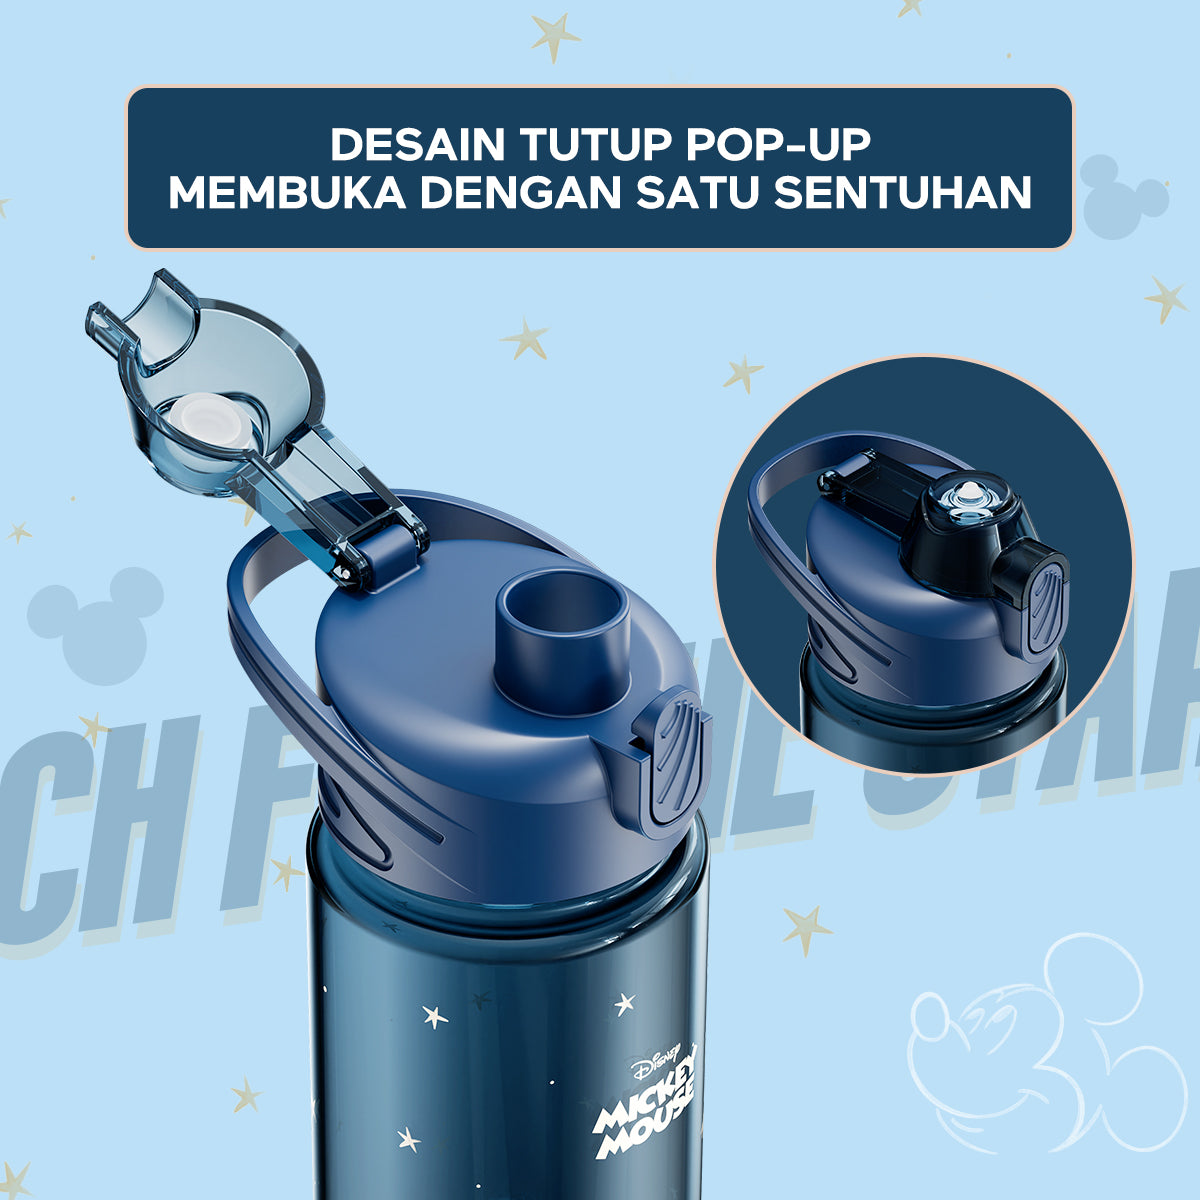 ecentio Disney botol minum 1000ml Portable Water Tumbler Botol 1 Liter